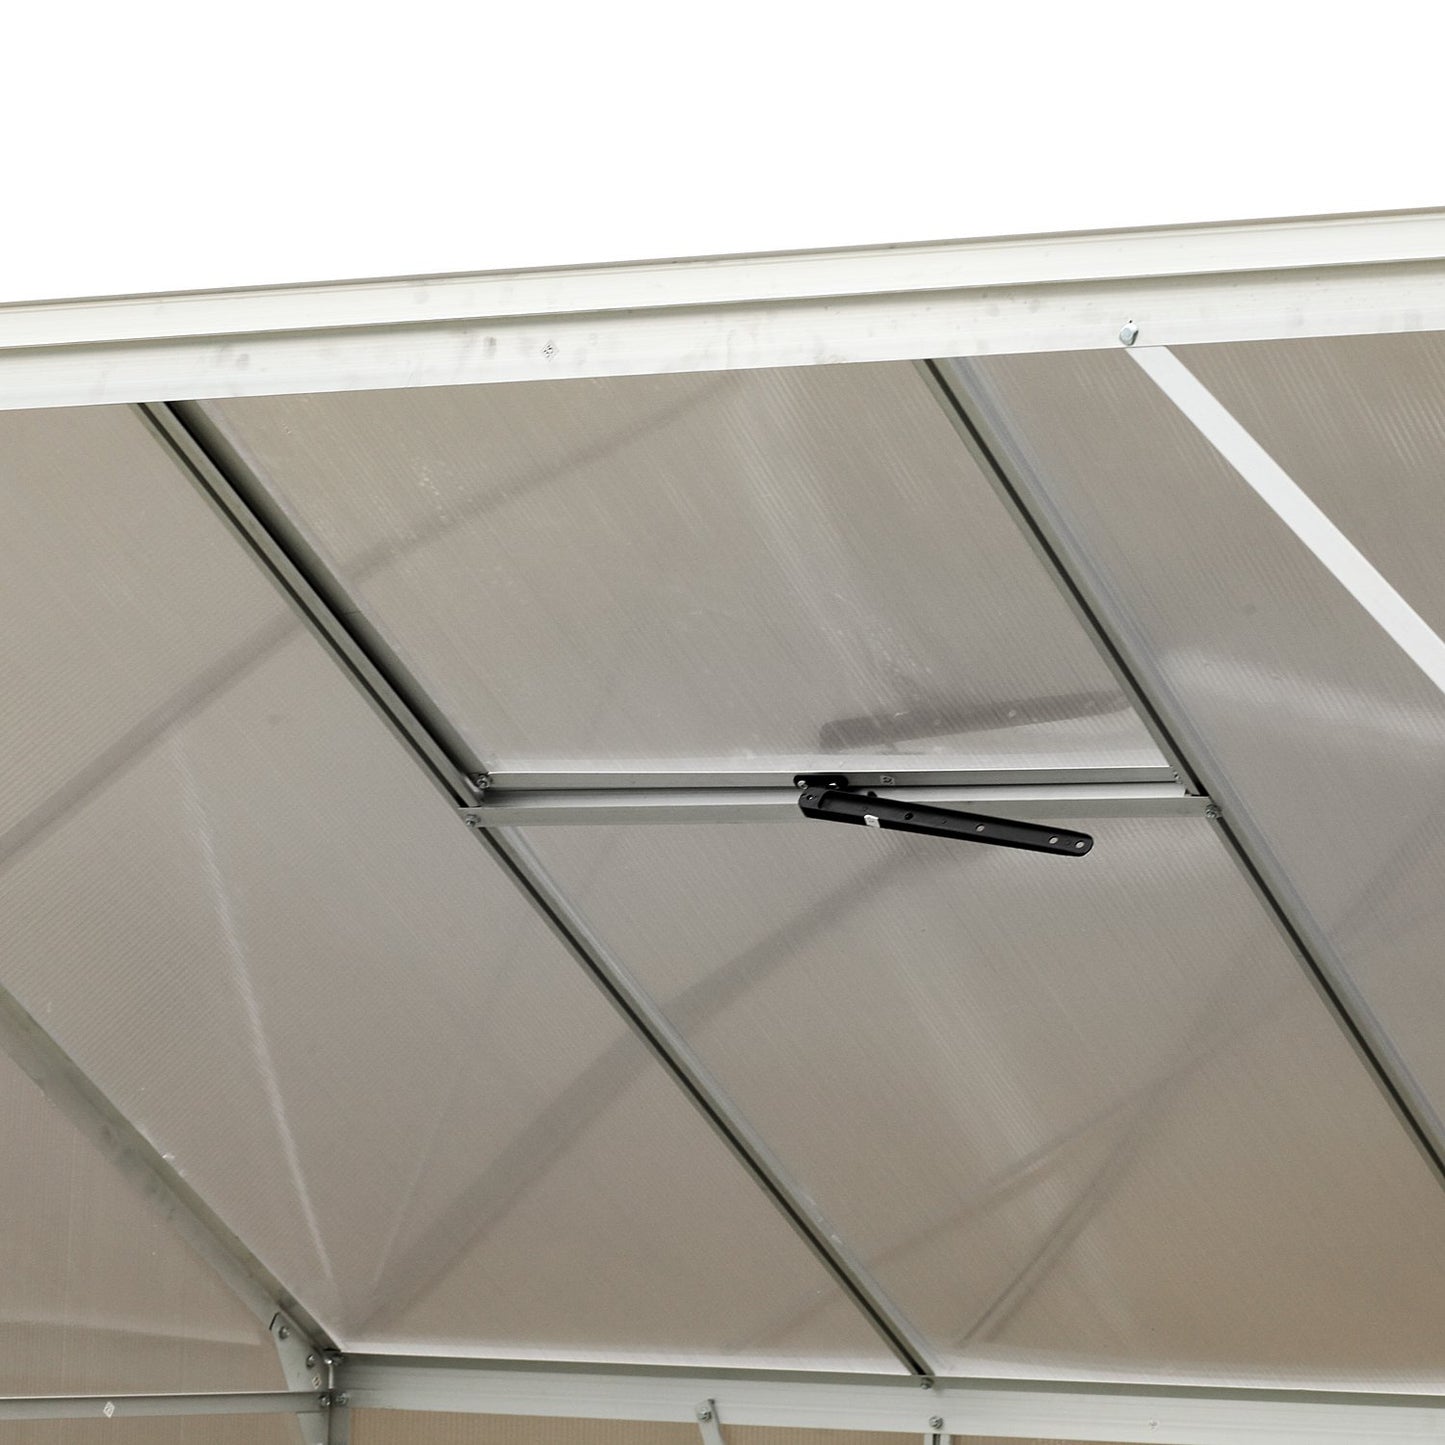 Outsunny Aluminum Lean to Garden Sun Greenhouse Enclosure with Screen 190 x 131 x 215 cm